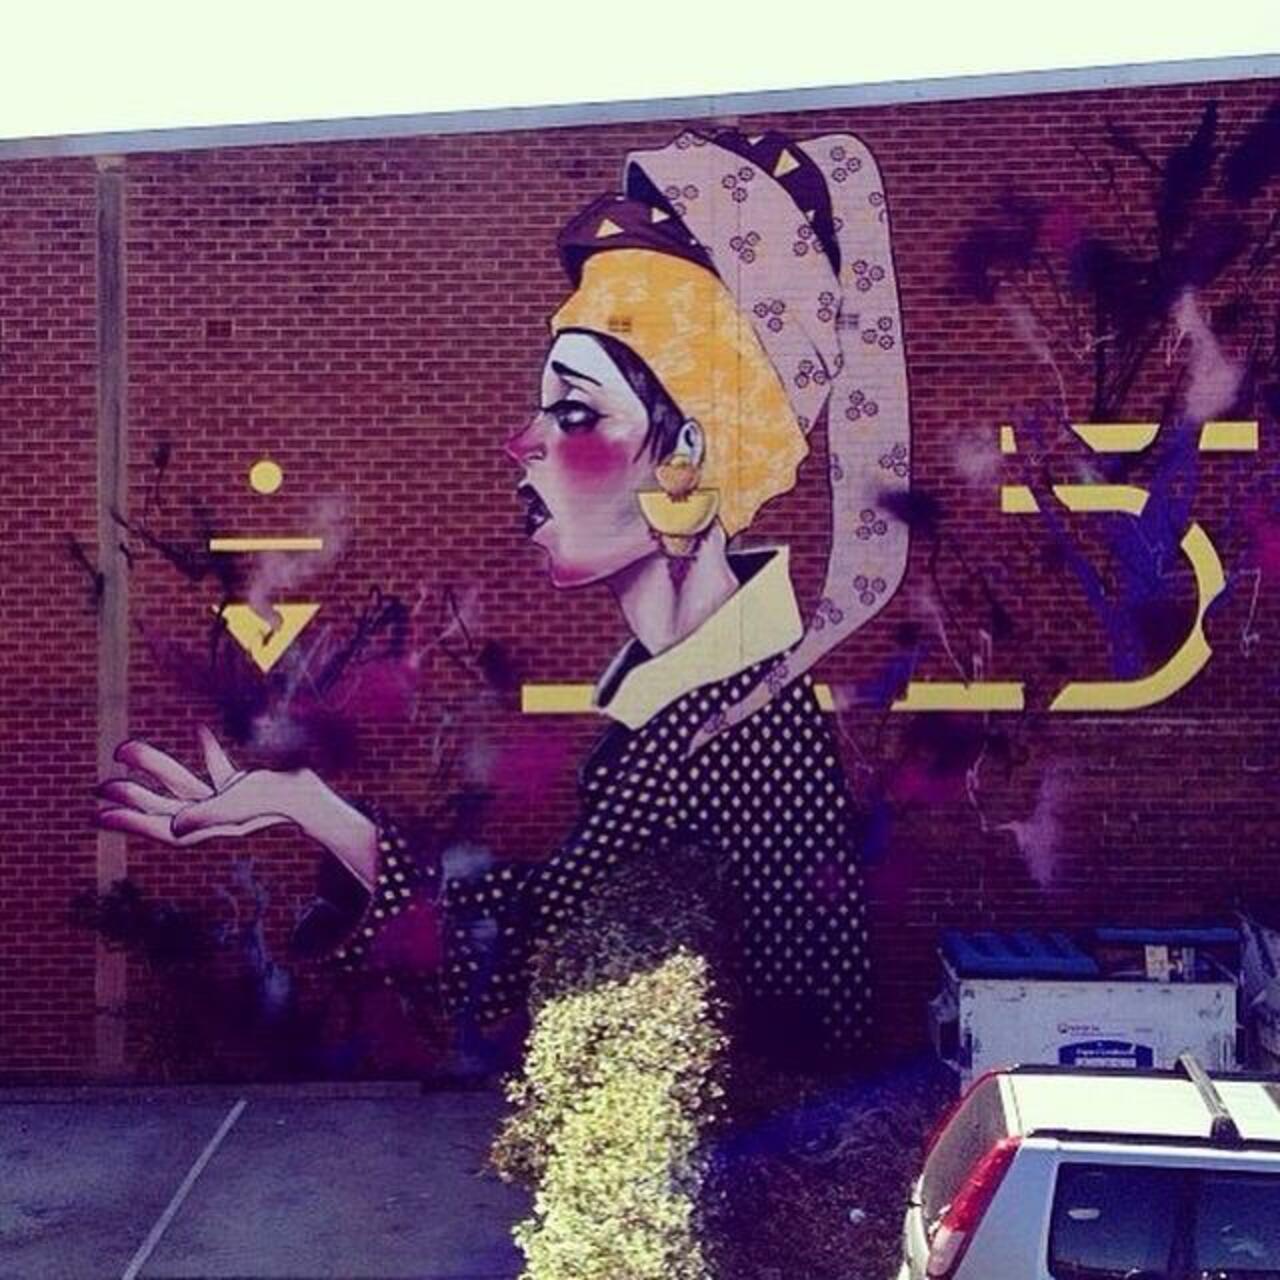 #art #streetart #graffiti 
#LucyLucy http://t.co/JJAVeXOknJ